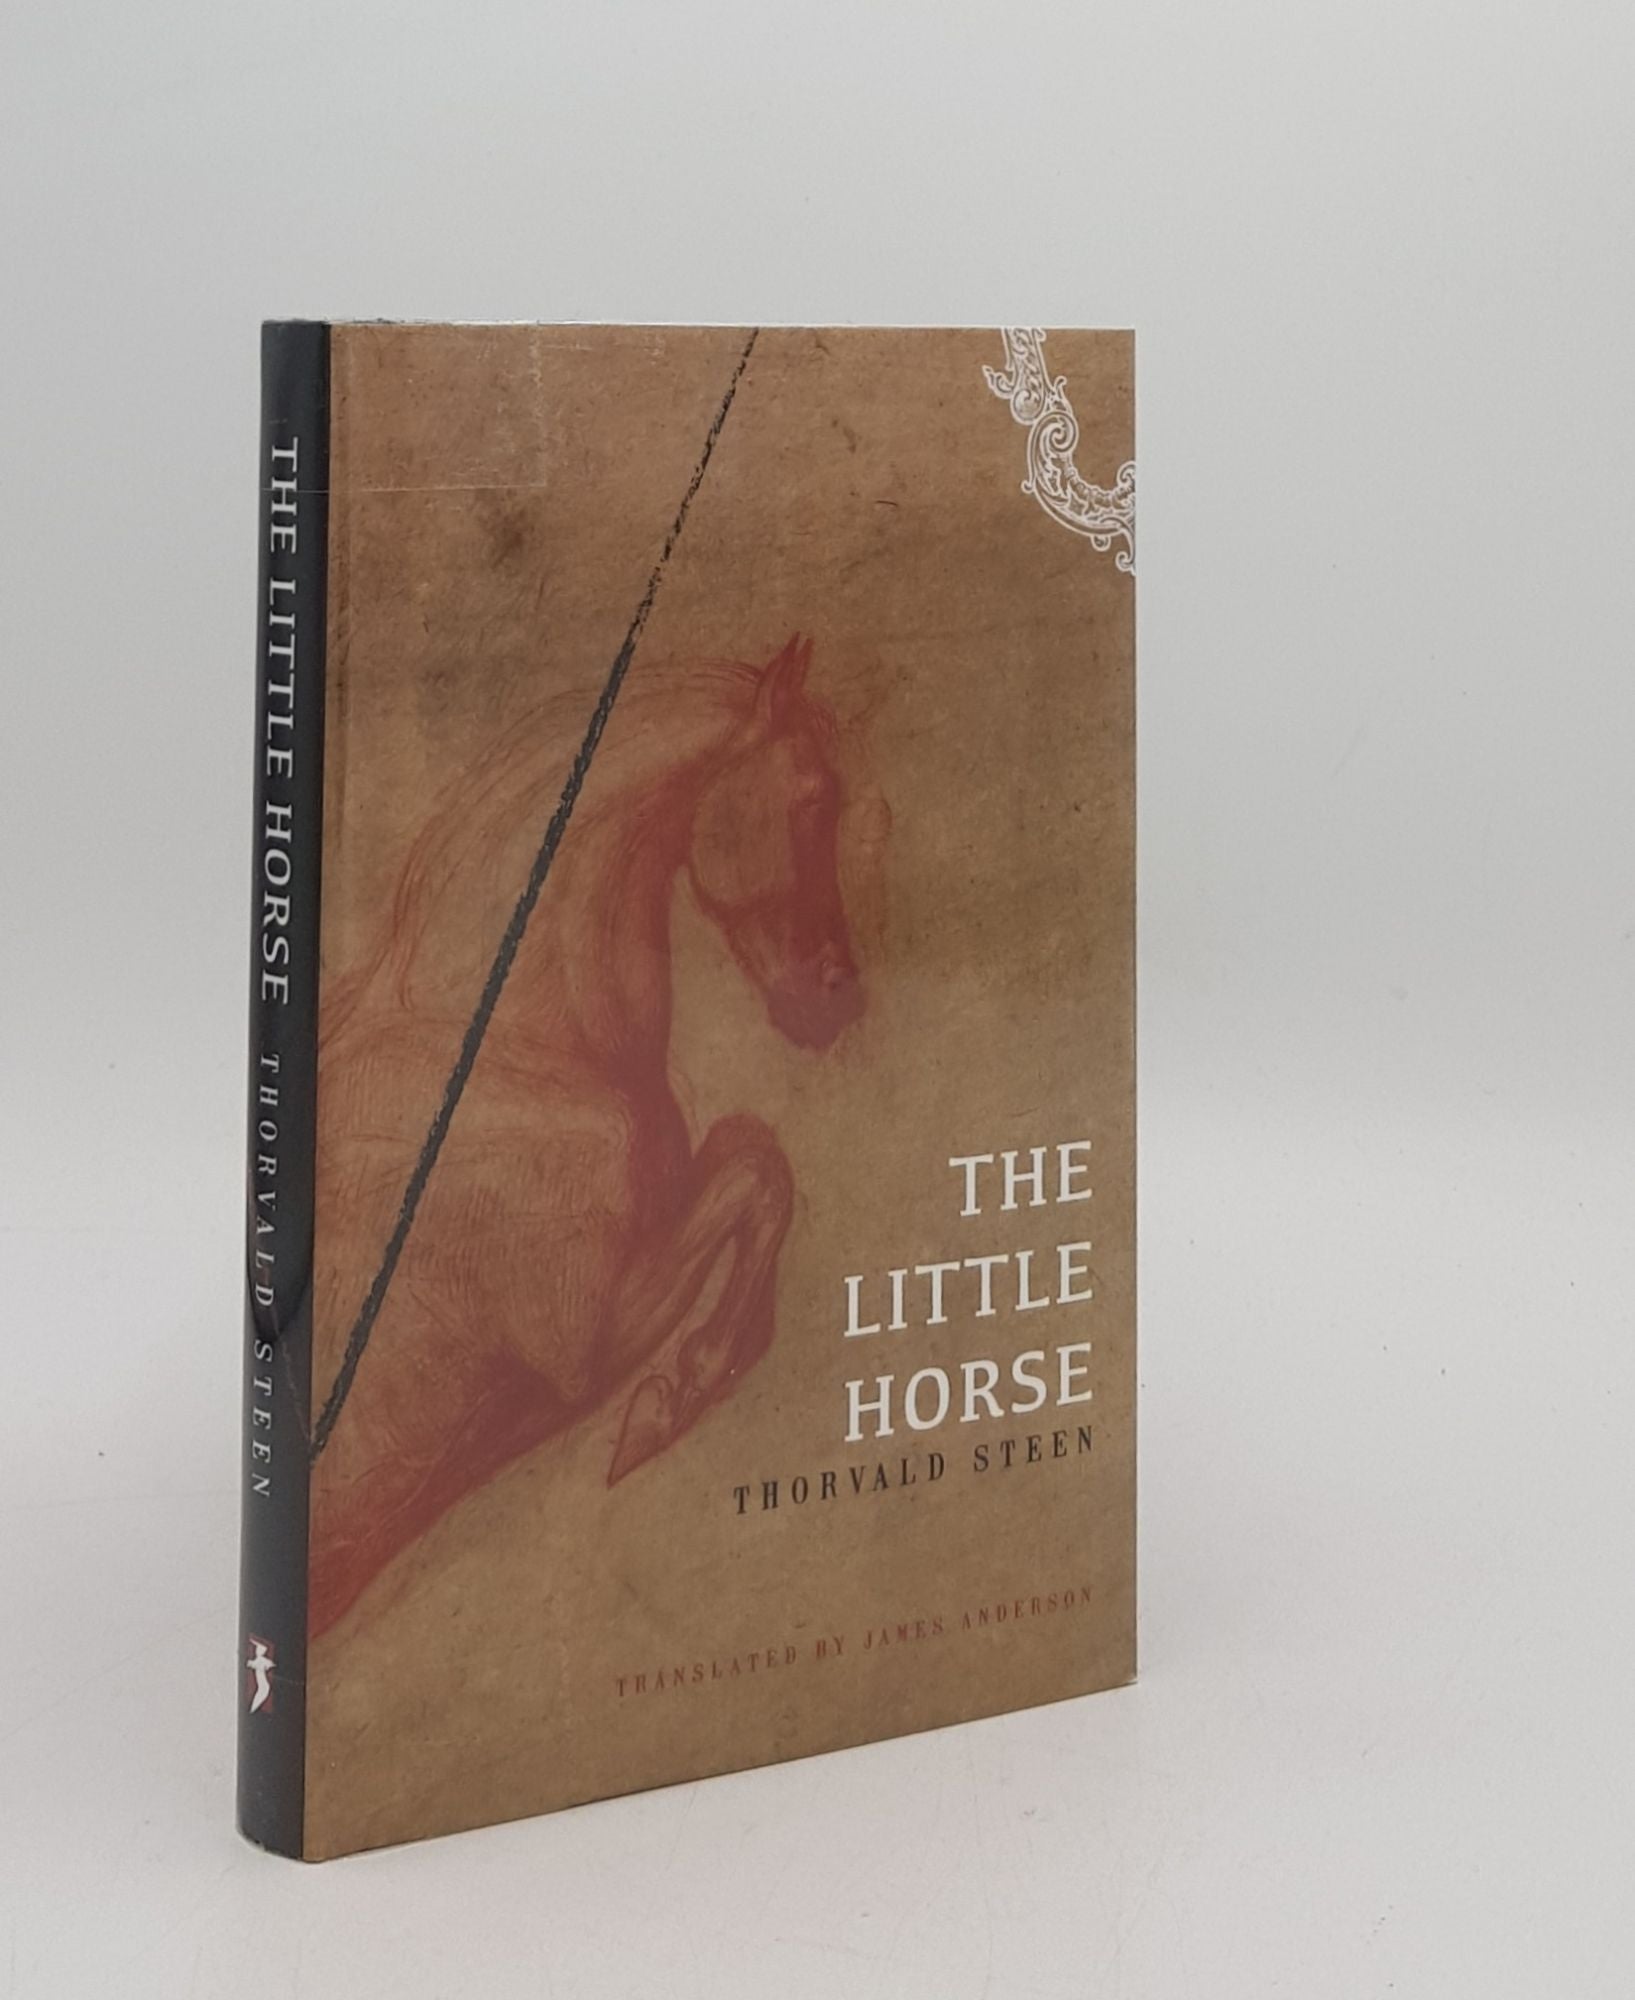 STEEN Thorvald, ANDERSON James [Translator] - The Little Horse